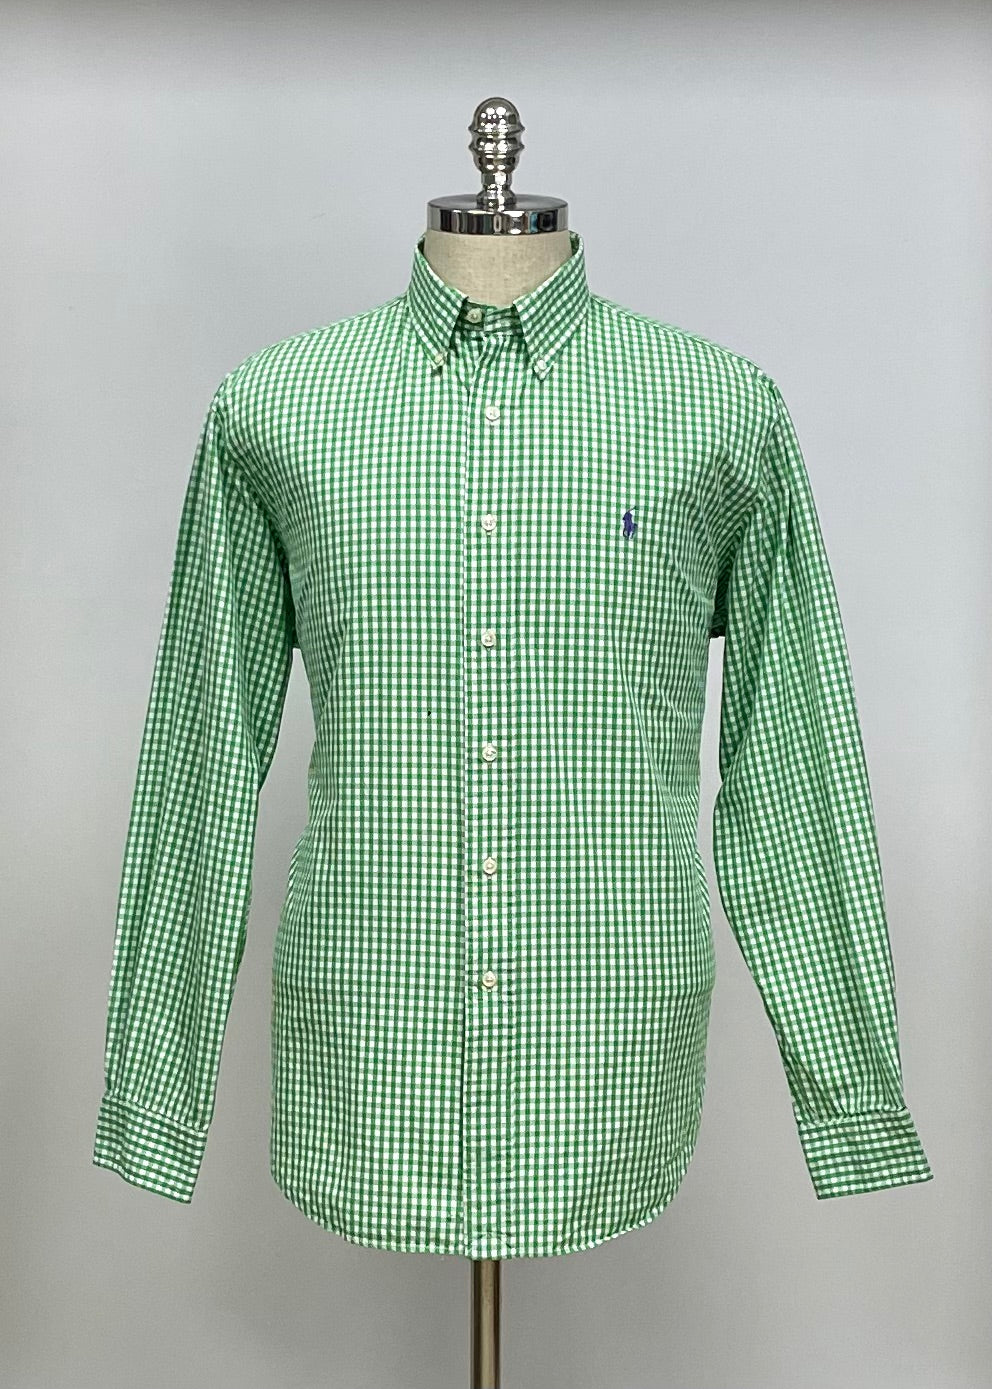 Camisa Polo Ralph Lauren 🏇🏼 con patron de cuadros gingham verde y blanco Talla L Entalle Regular (ver descripción)